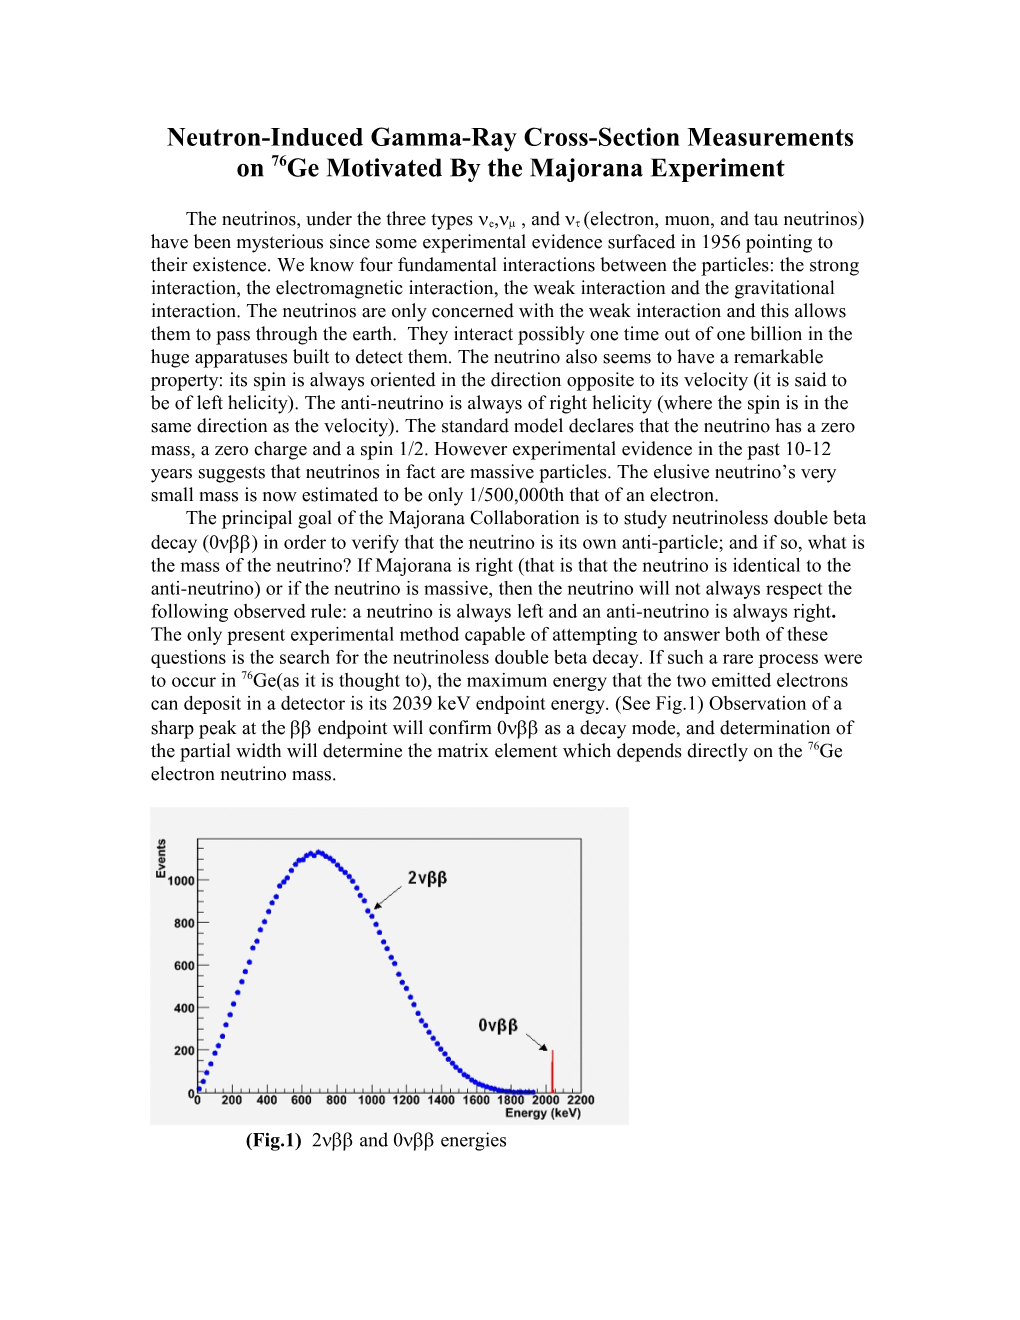 Neutron-Induced Partial Gamma-Ray